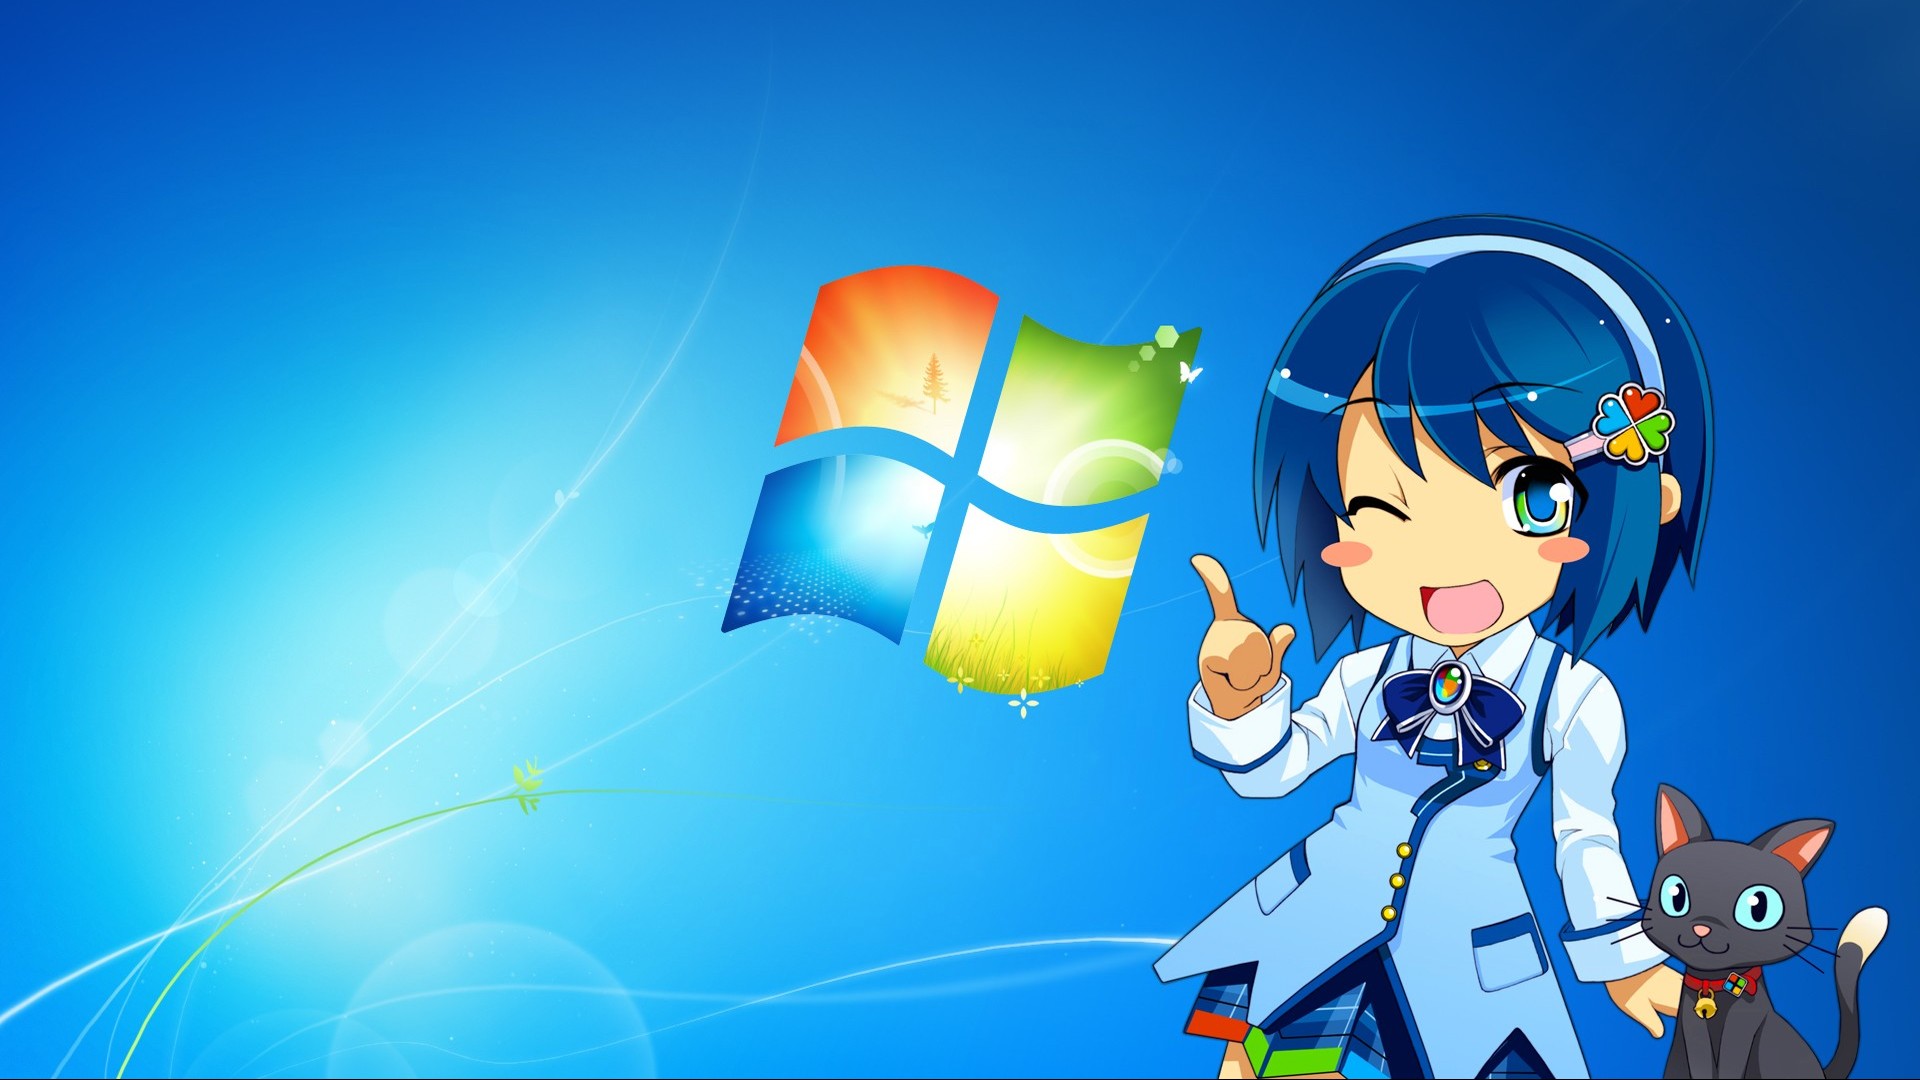 Windows 7, Madobe Nanami, Microsoft Windows, OS-tan, anime girls - desktop wallpaper